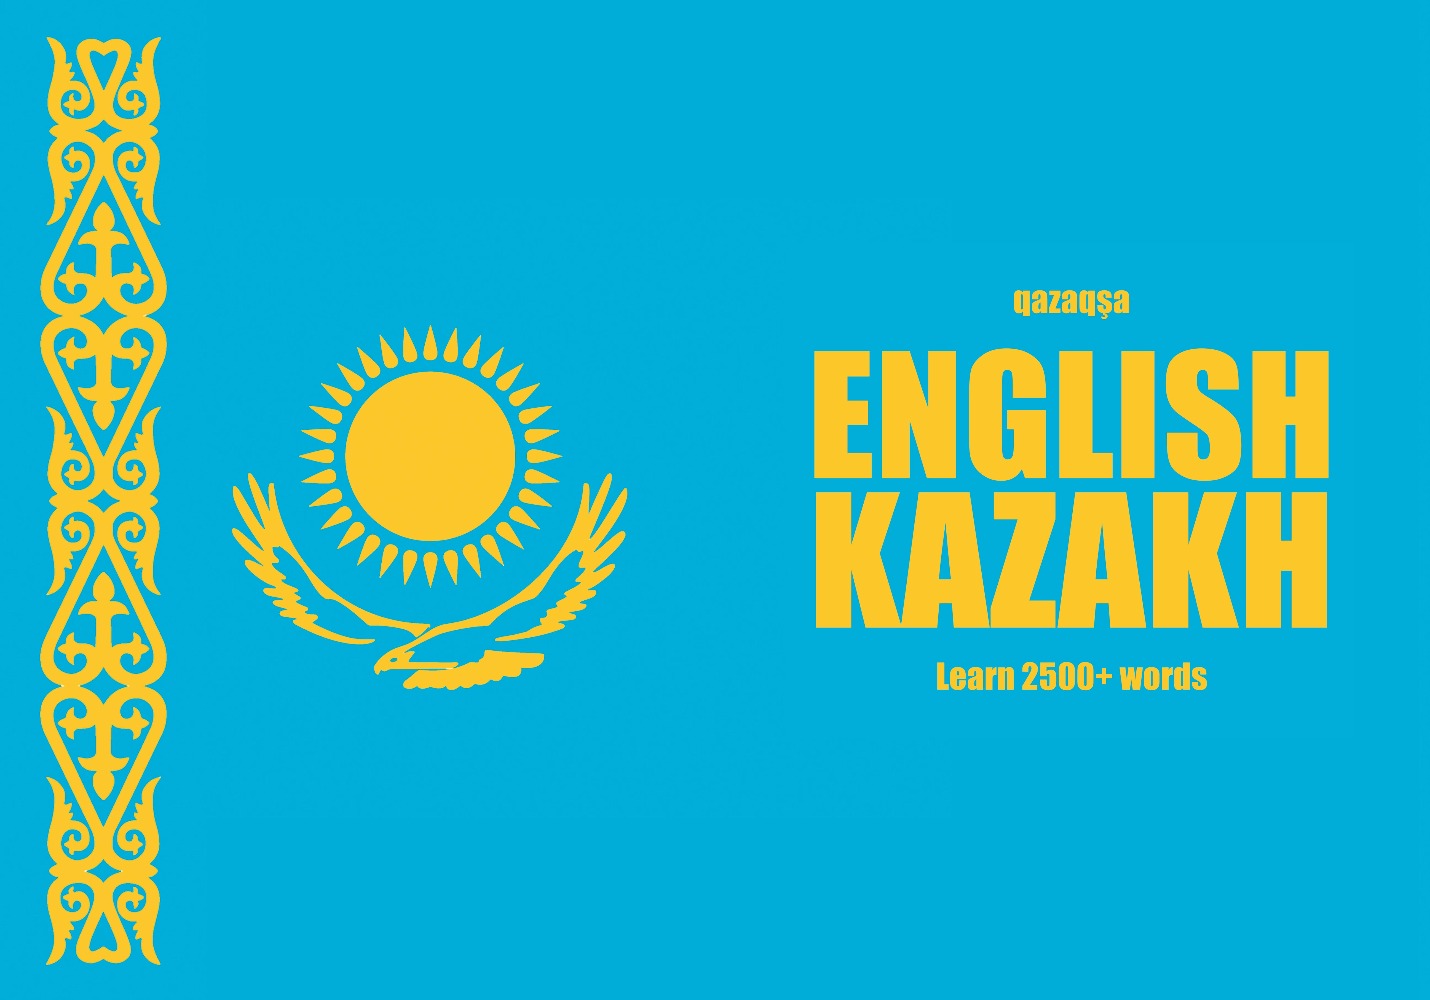 Kazakh language learning notebook cover